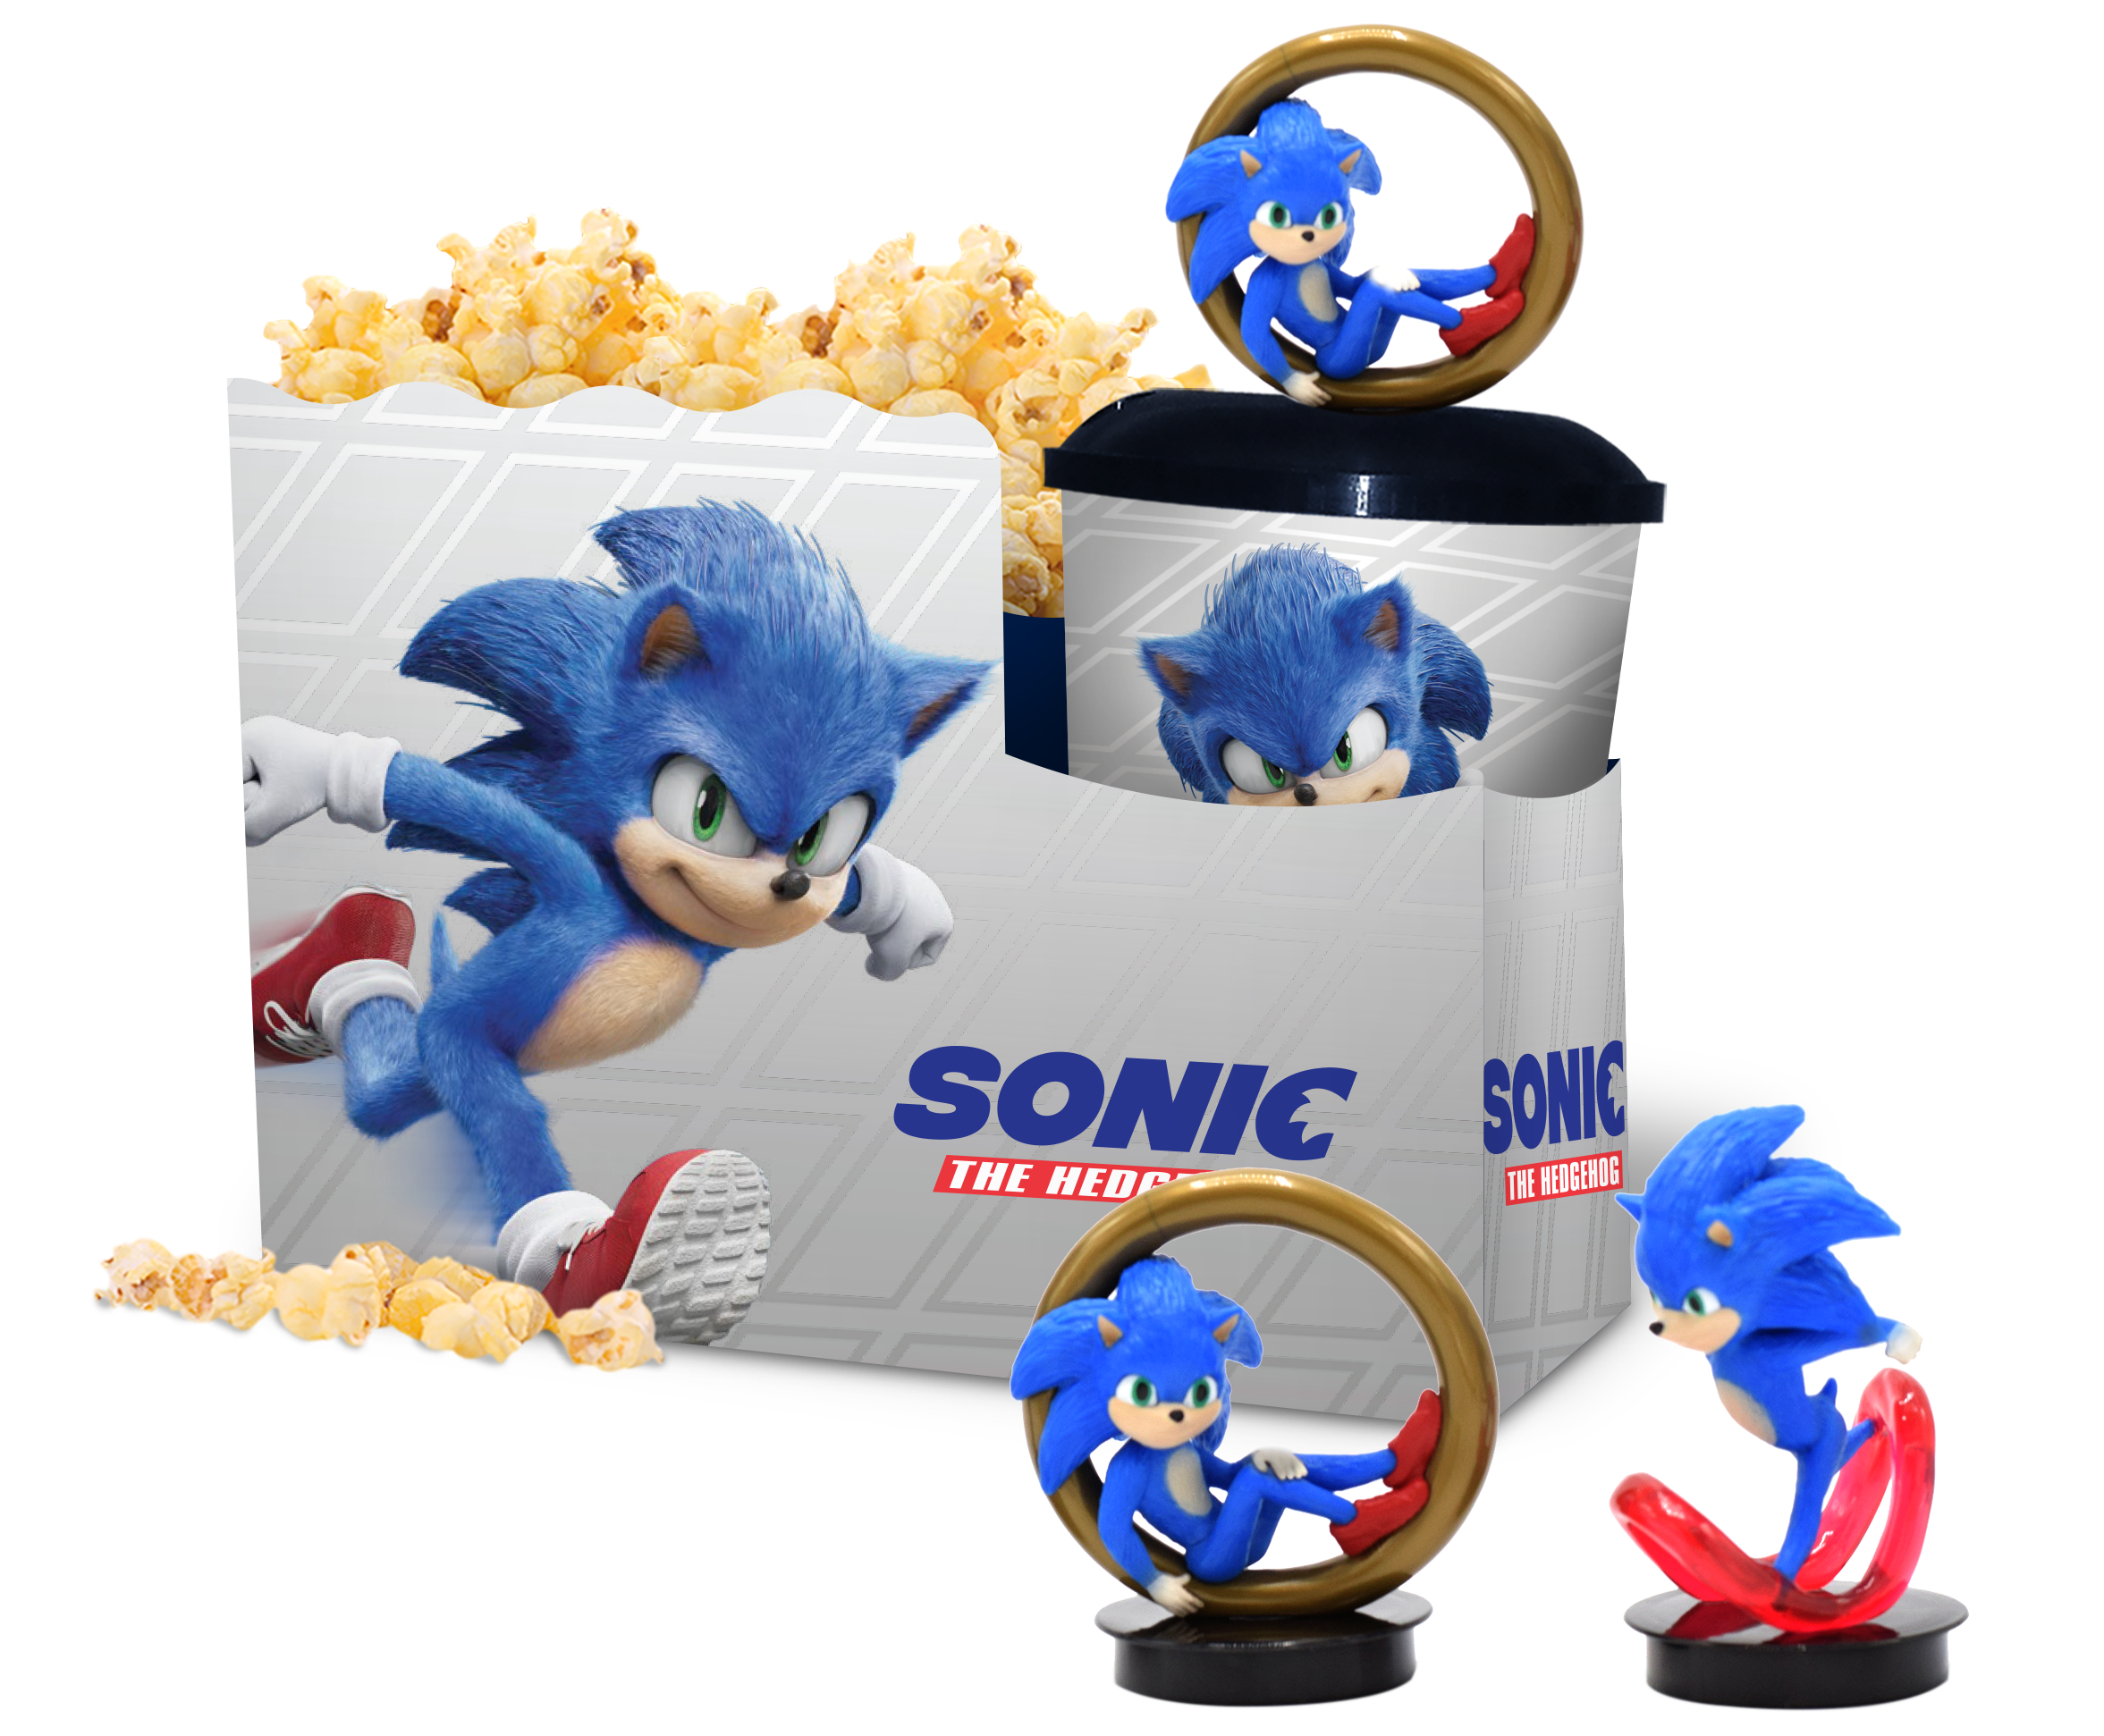 Sonic The Hedgehog – Kids Pack